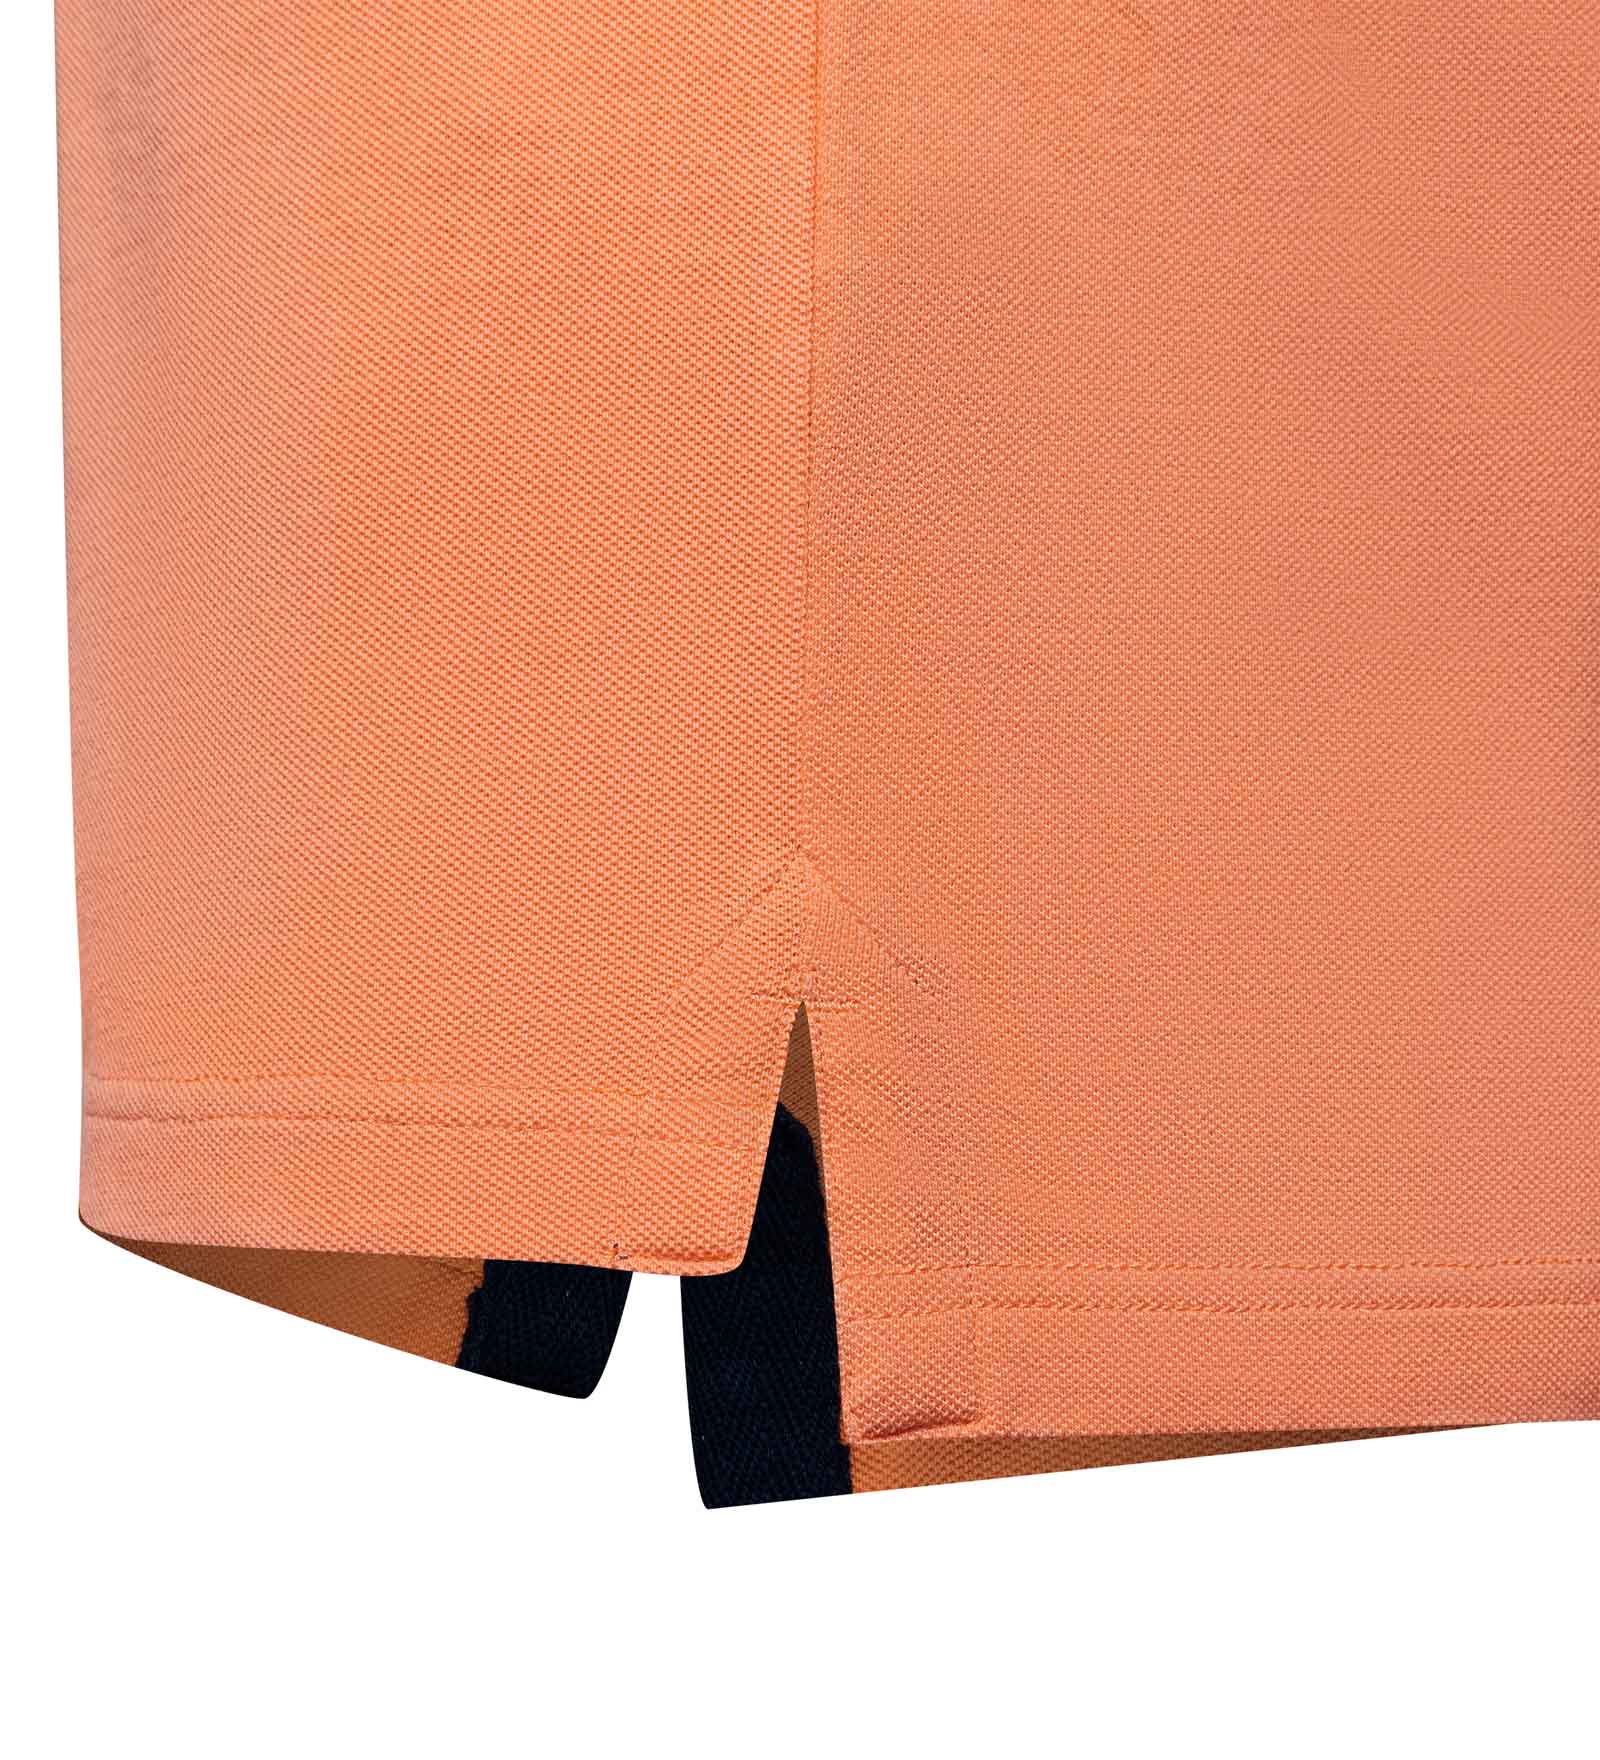 St. Barth Polo Shirt orange